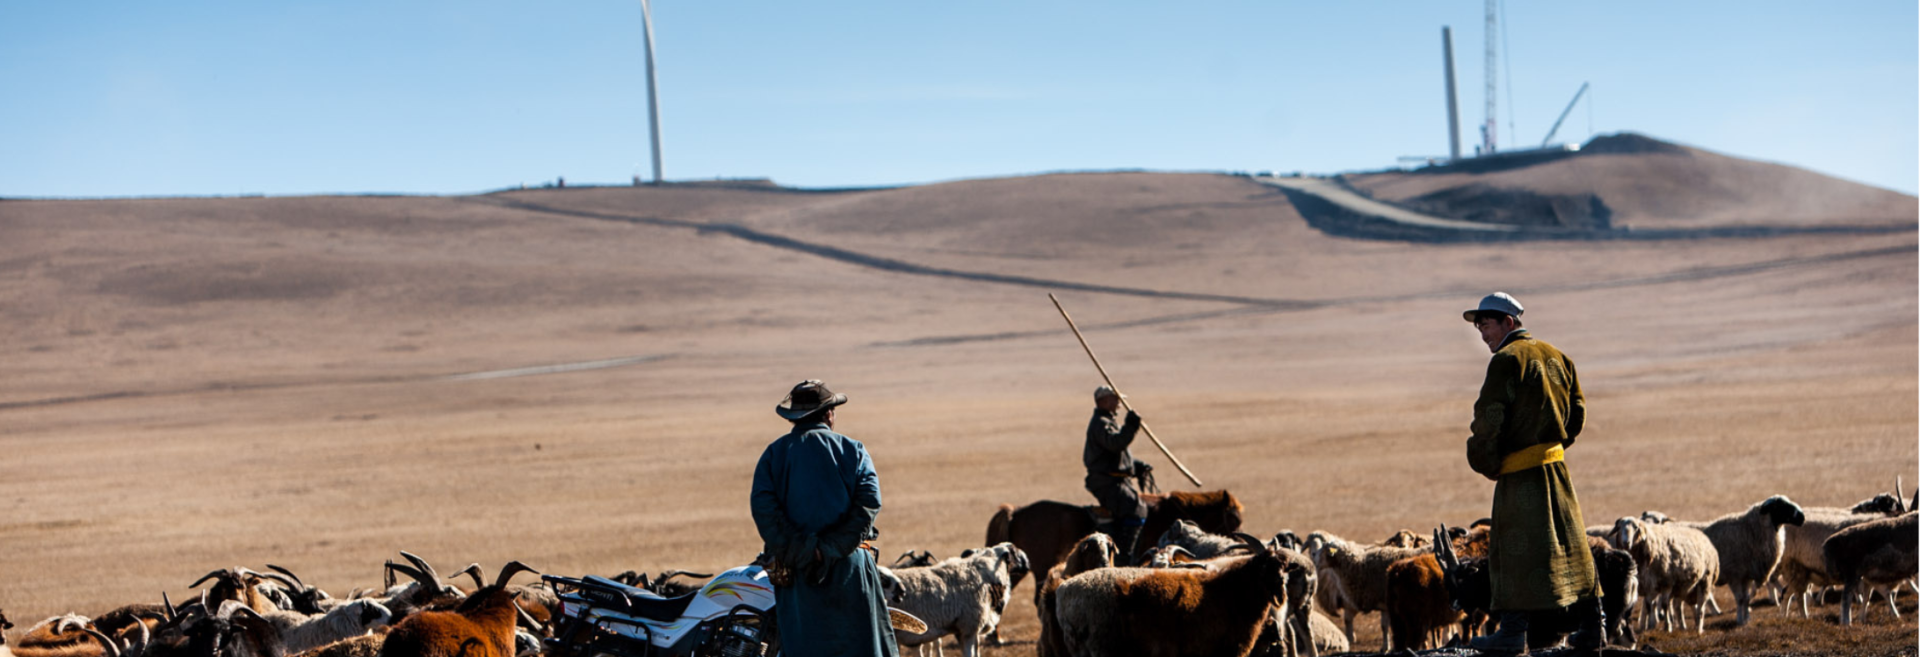 Salkhit Wind Farm – Mongolia image 